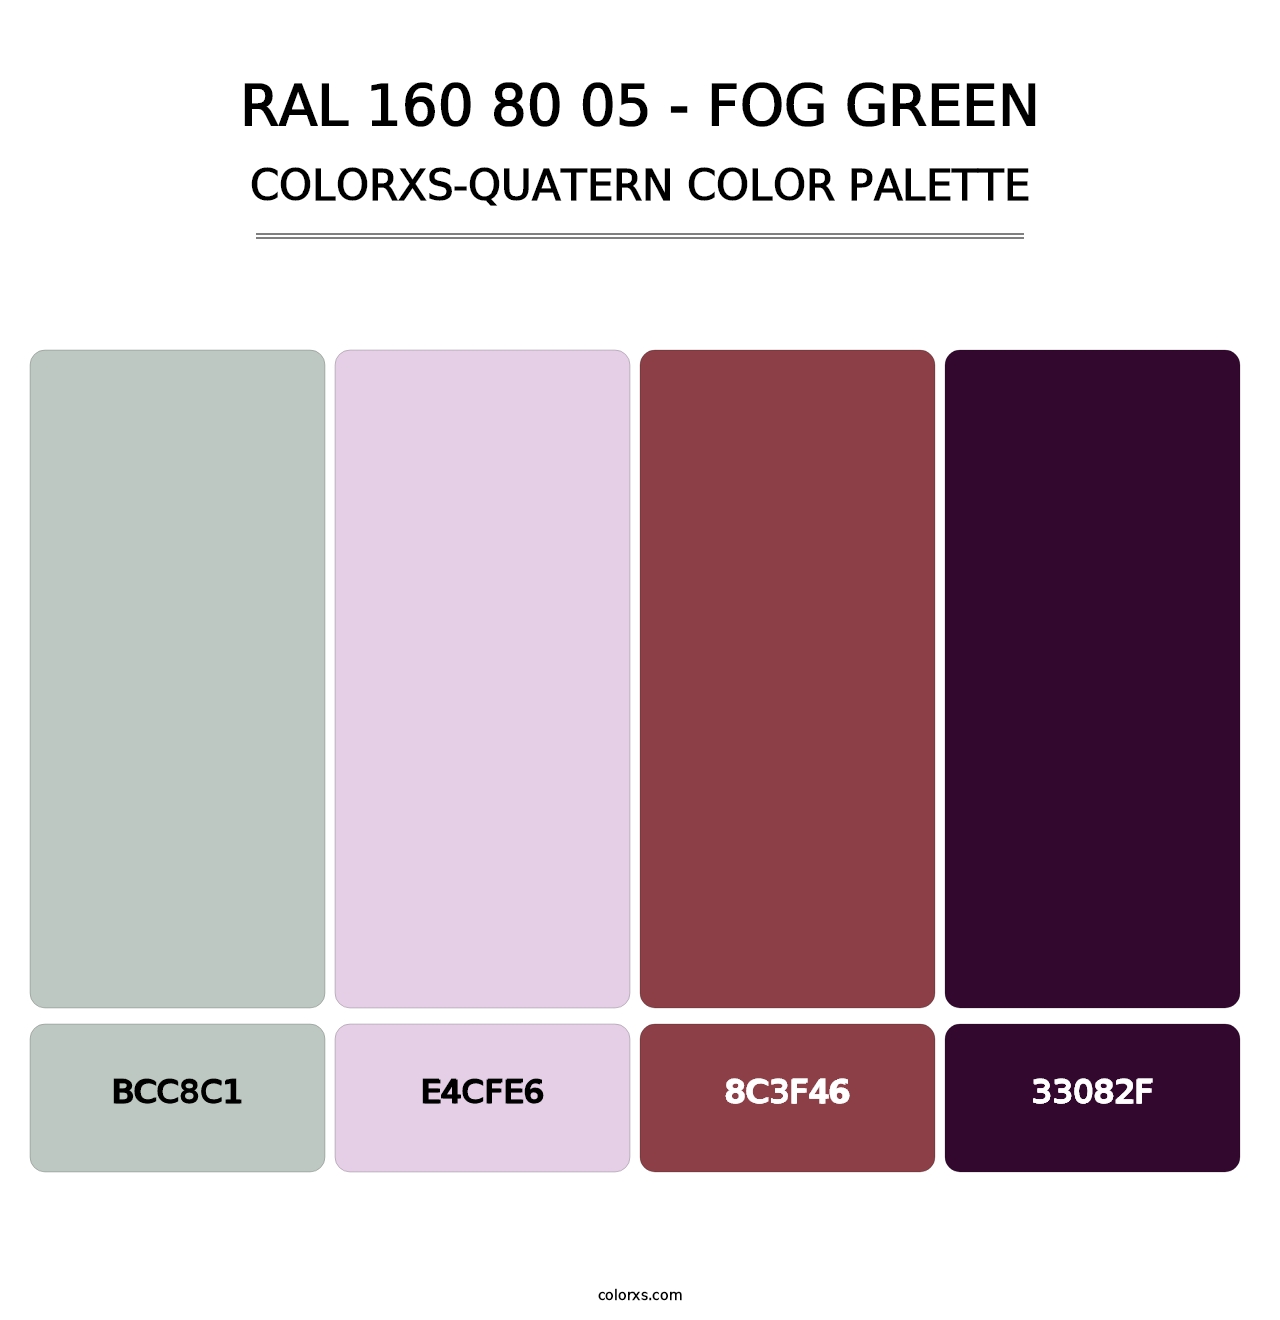 RAL 160 80 05 - Fog Green - Colorxs Quatern Palette